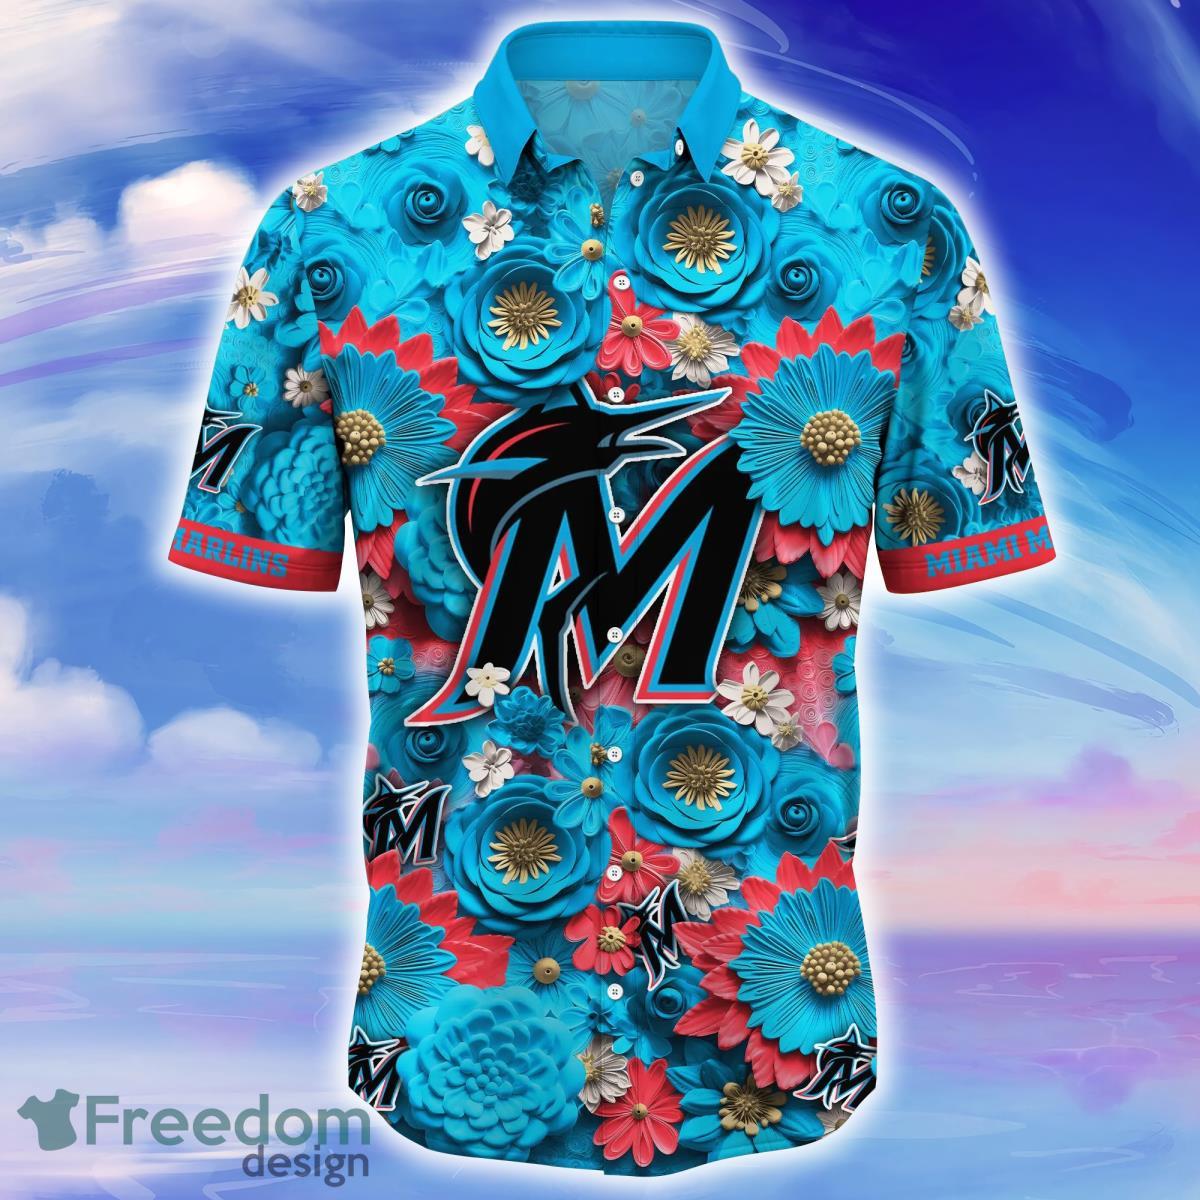 MLB Miami Marlins Logo Hawaii Baseball Jersey Shirt For Fans - Freedomdesign